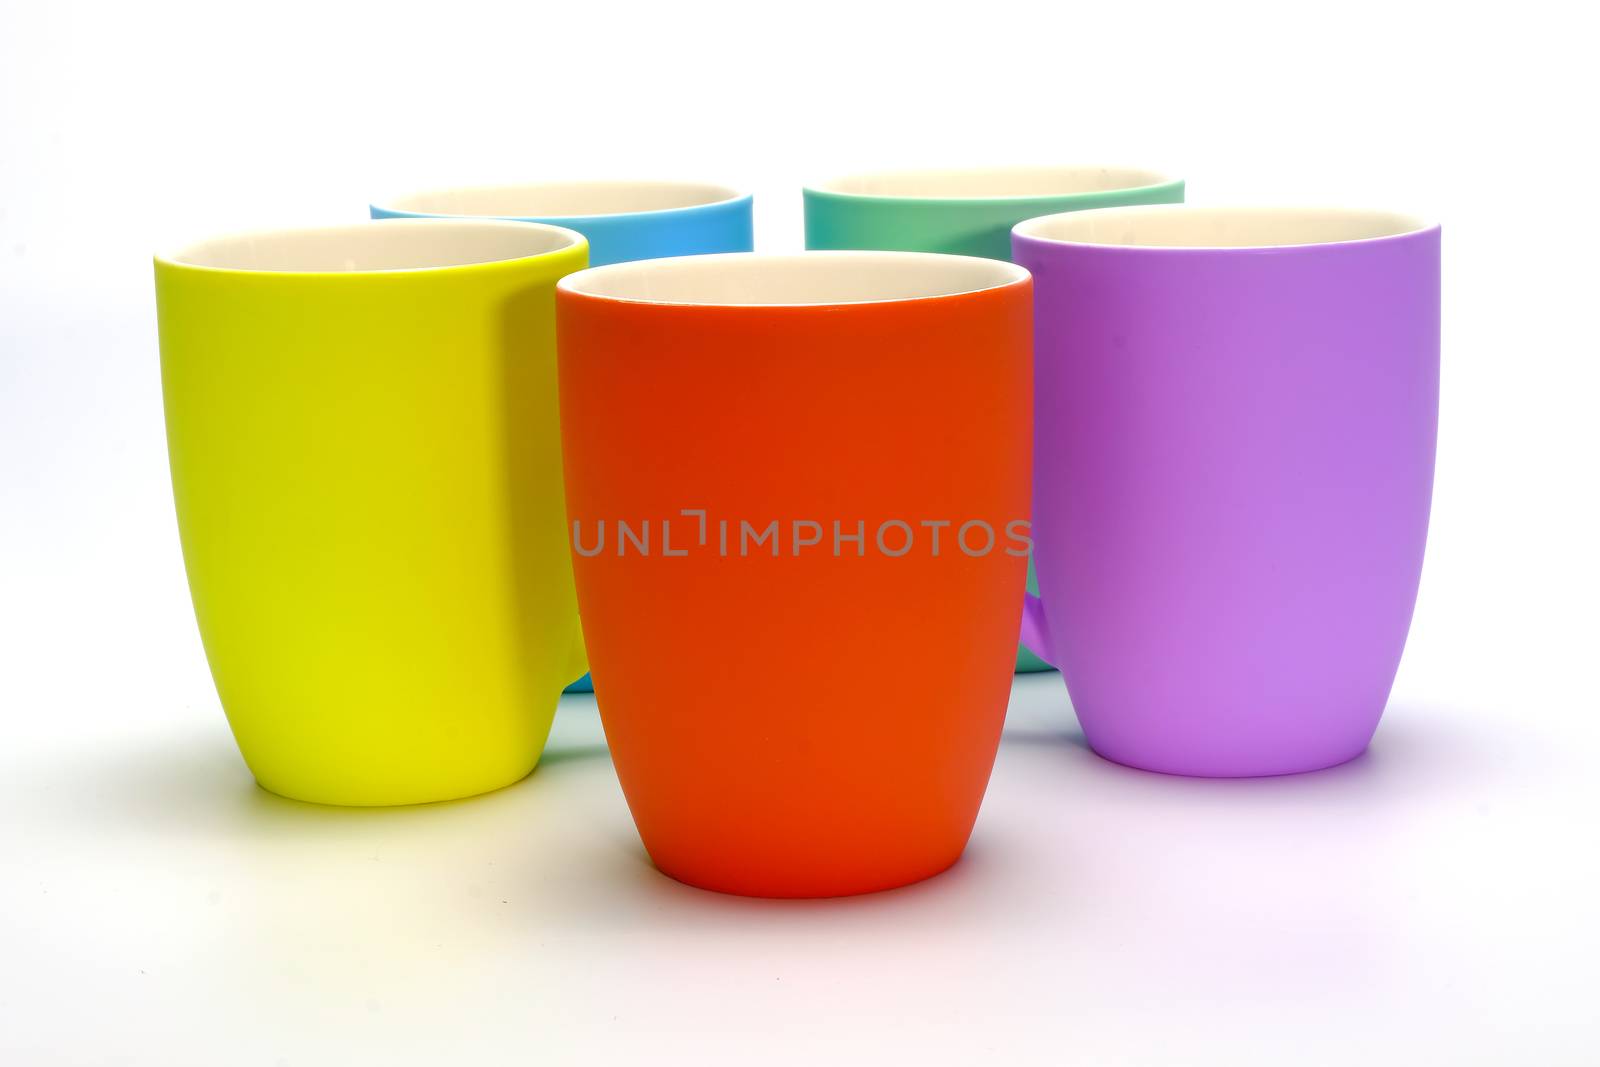 olorful coffee mugs isolated on white background